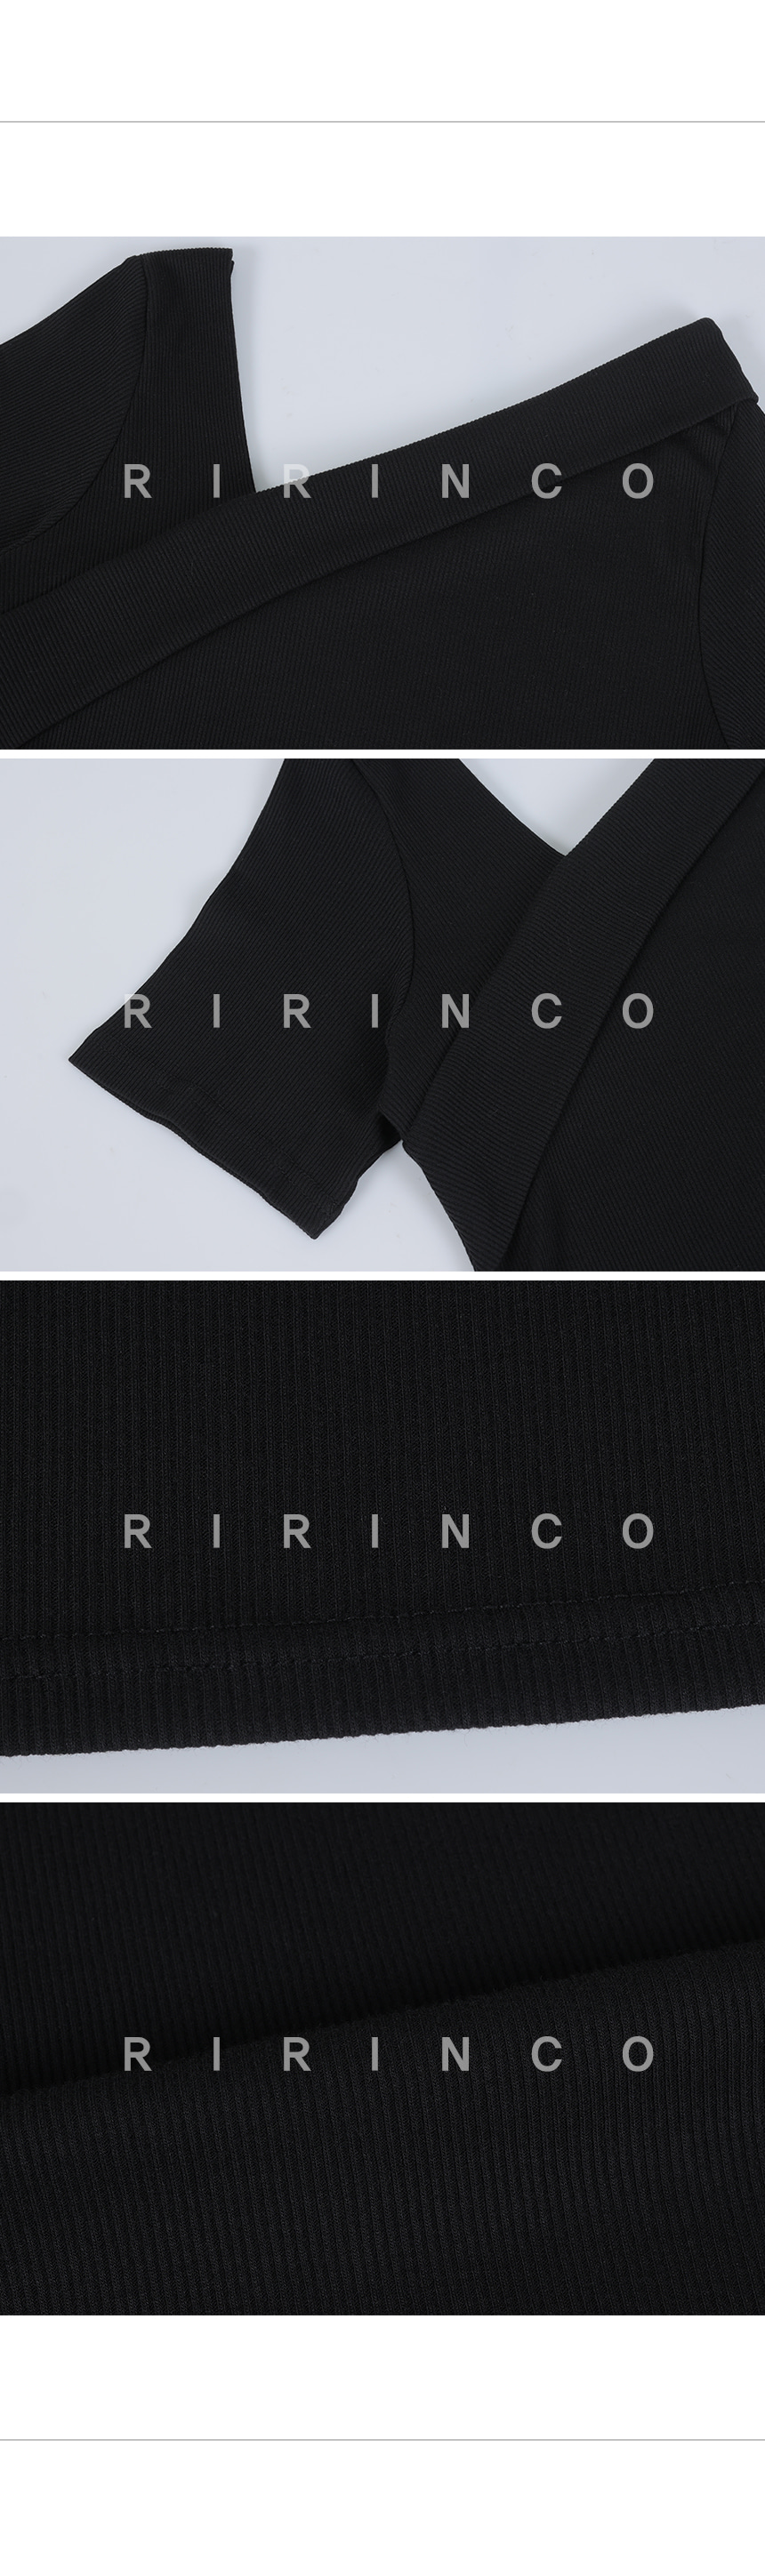 RIRINCO リブ生地ラップタイプTシャツ